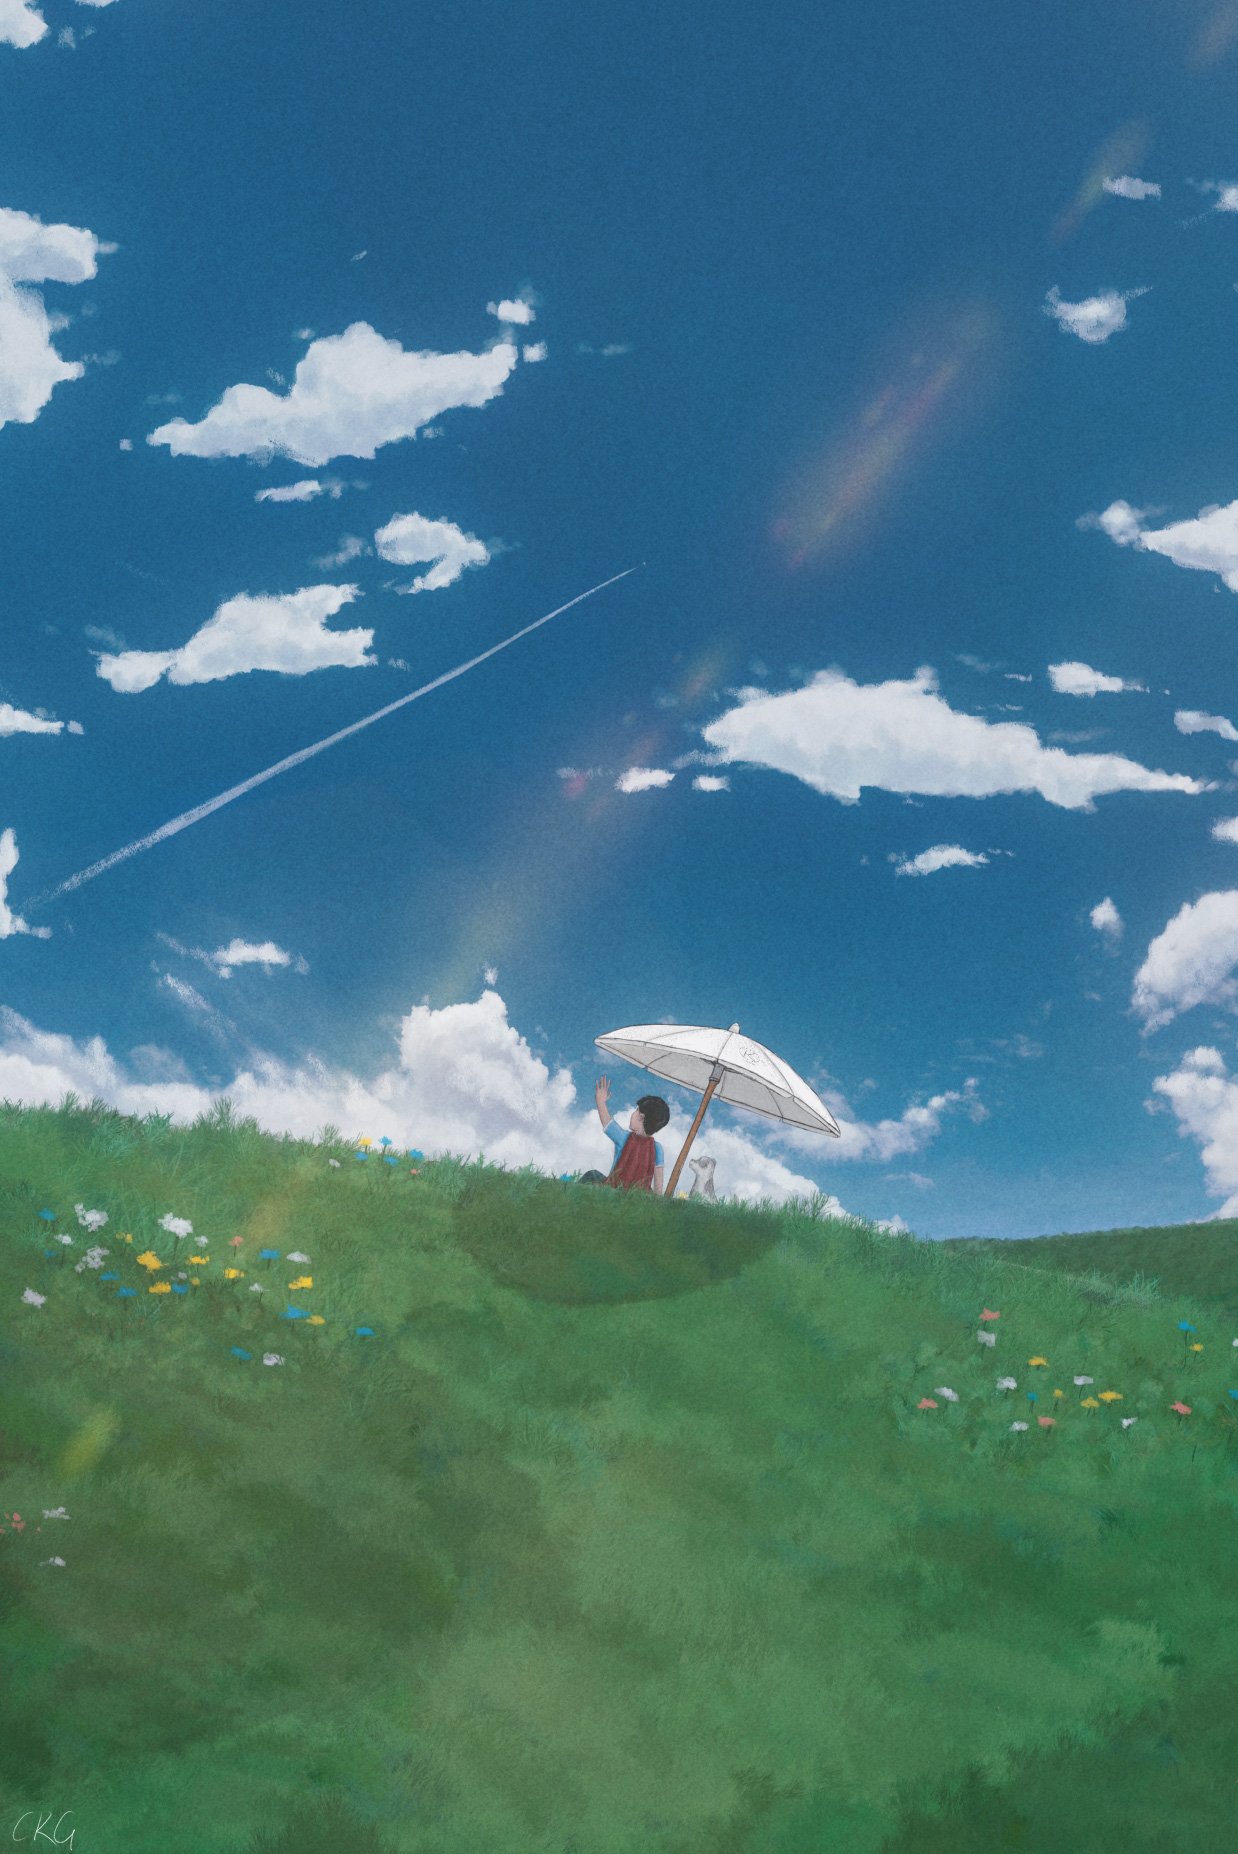 Anime 1238x1854 digital art anime anime boys dog outdoors nature field grass clouds sky summer sitting portrait display red cape sunlight ridges